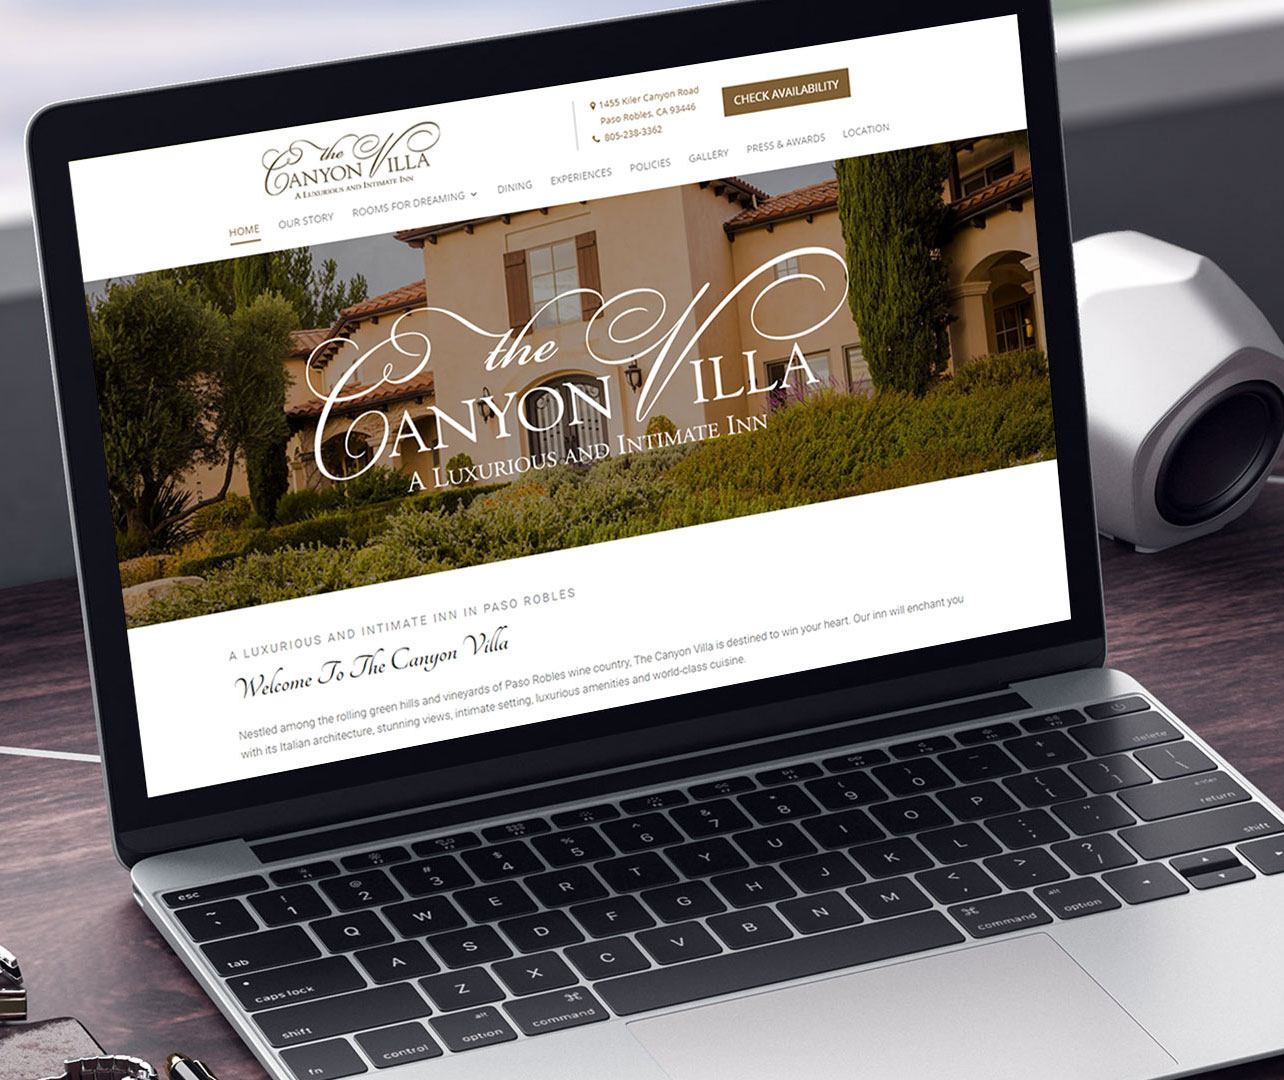 Canyon villa homepage on a laptop screen